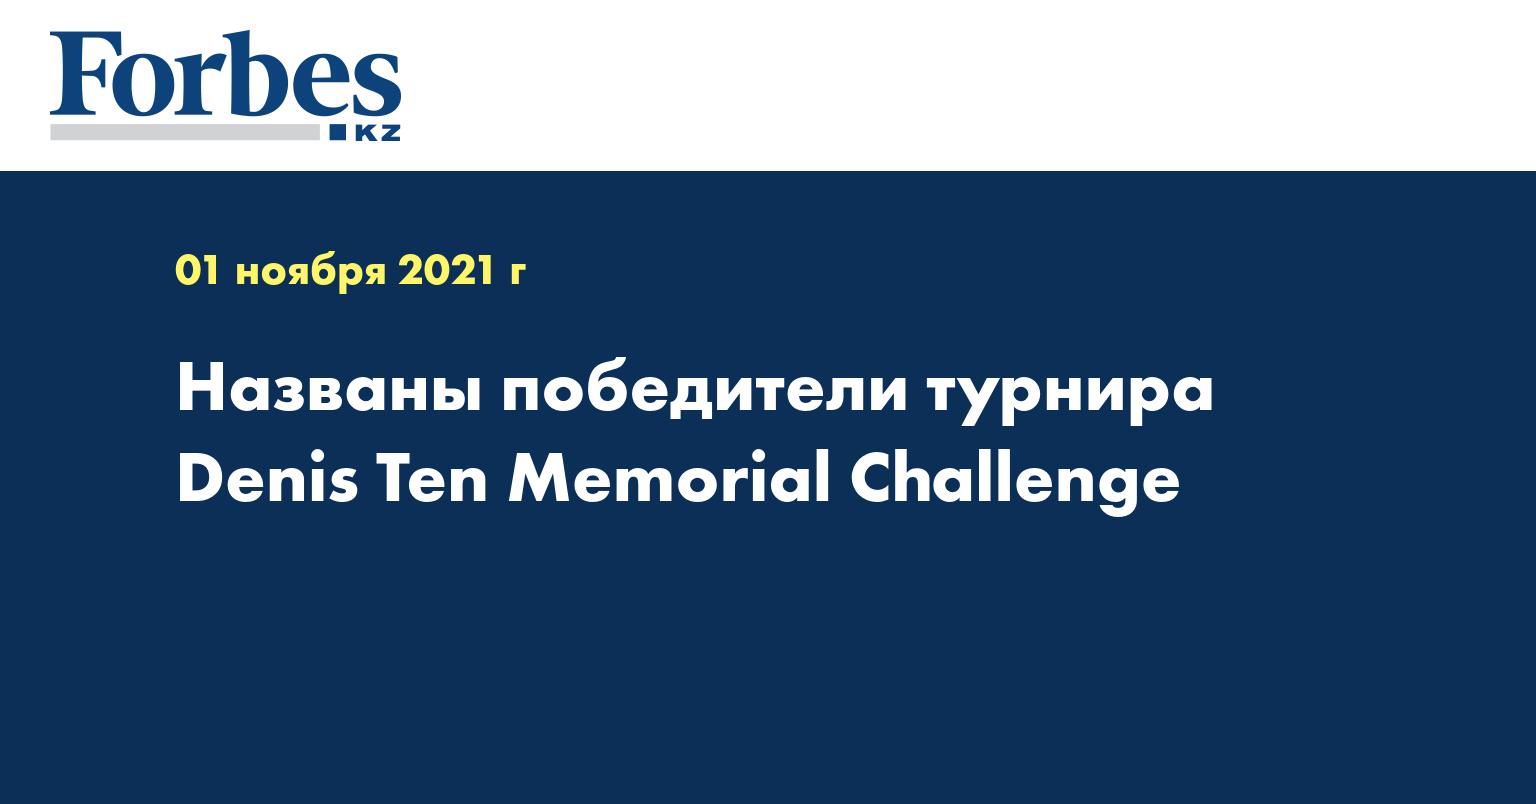 Названы победители турнира Denis Ten Memorial Challenge